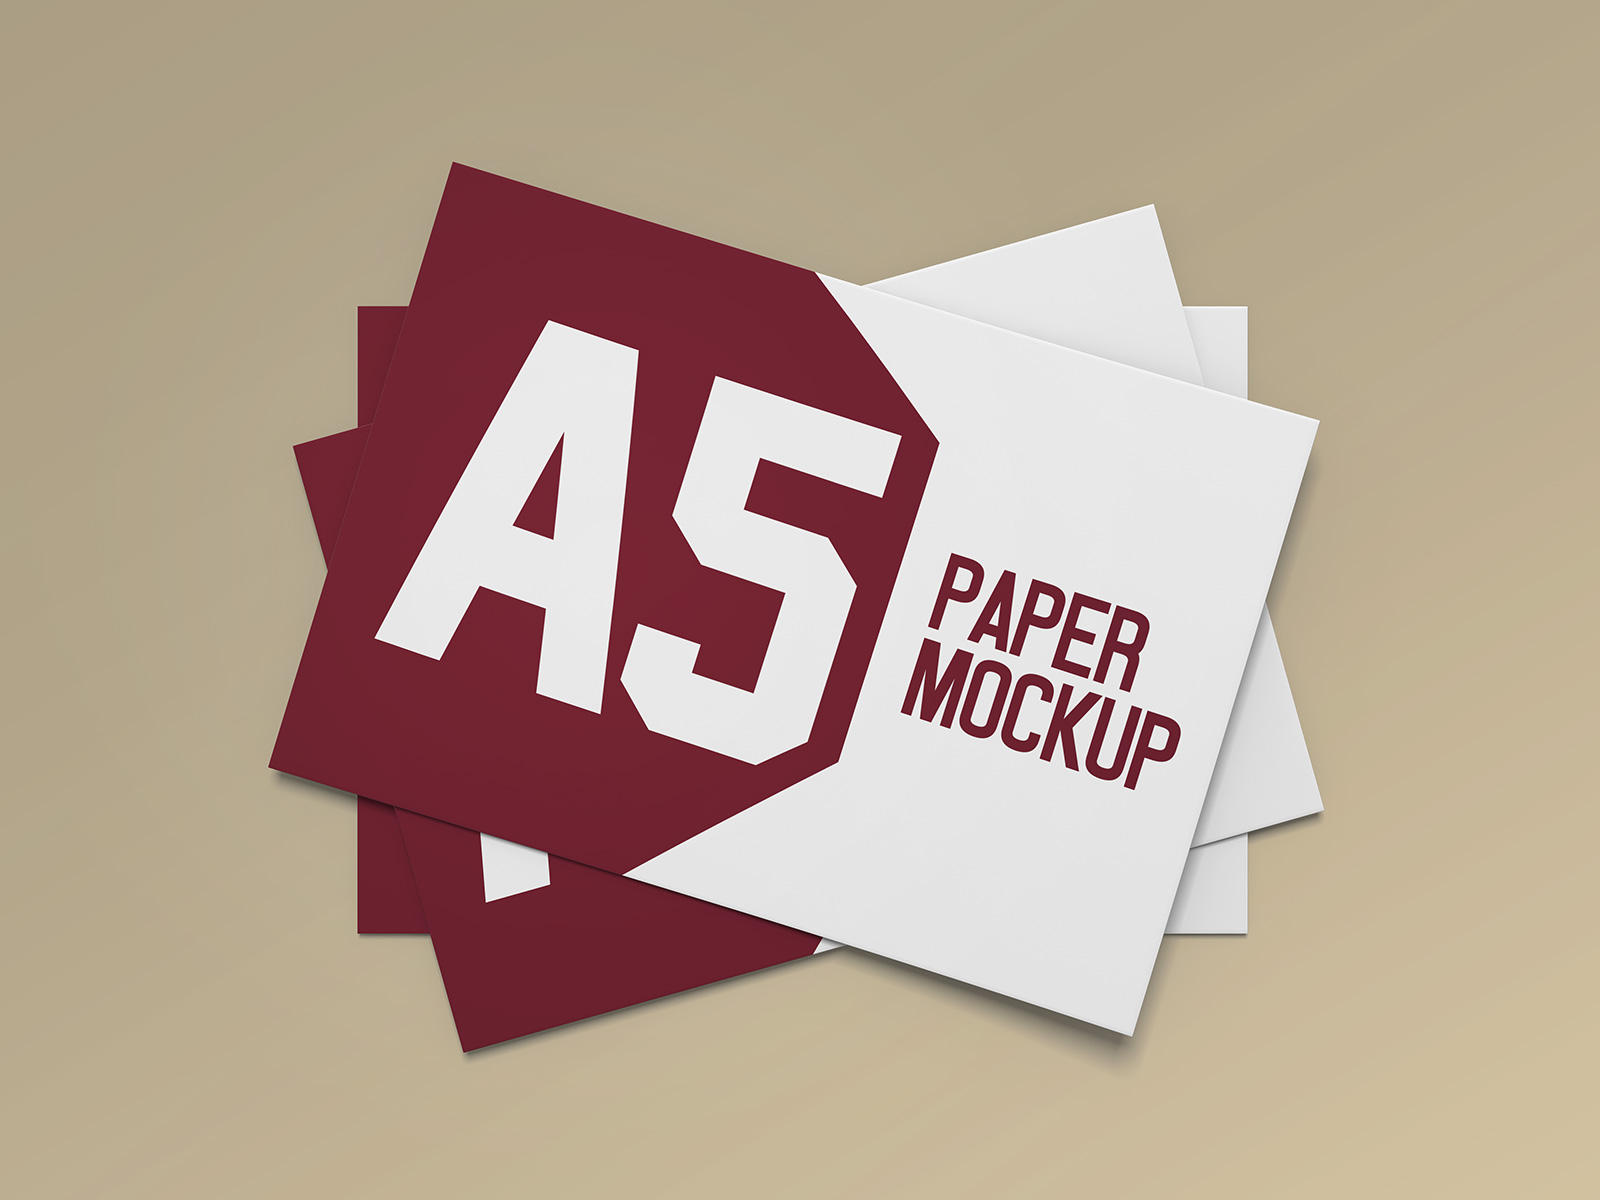 Free-Landscape-A5-Flyer-Paper-Mockup-PSD-Set